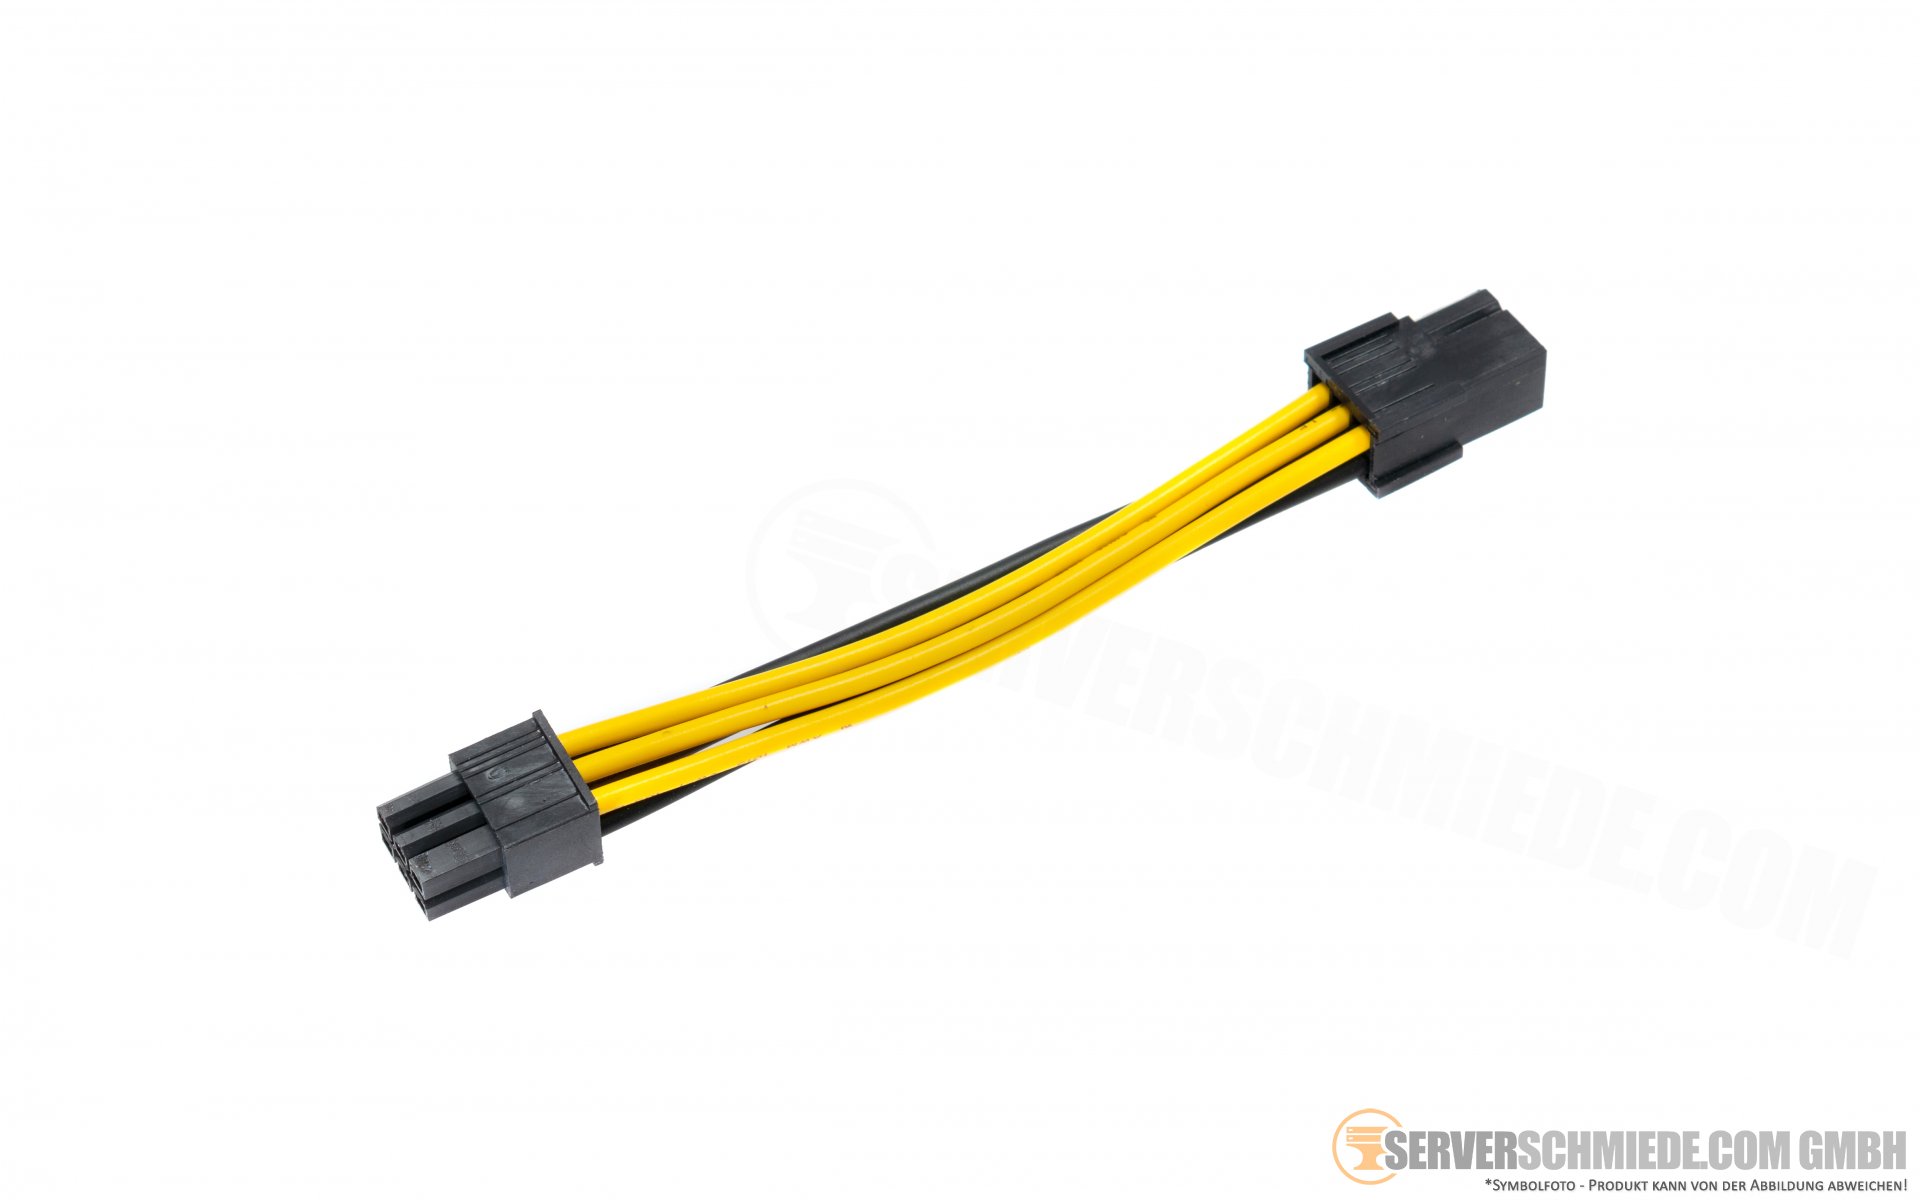 https://www.serverschmiede.com/images/product_images/info/generic-15cm-gpu-6-pin-power-kabel-verlaengerung-cable-1x-6-pin-male-1x-6-pin-female.jpg